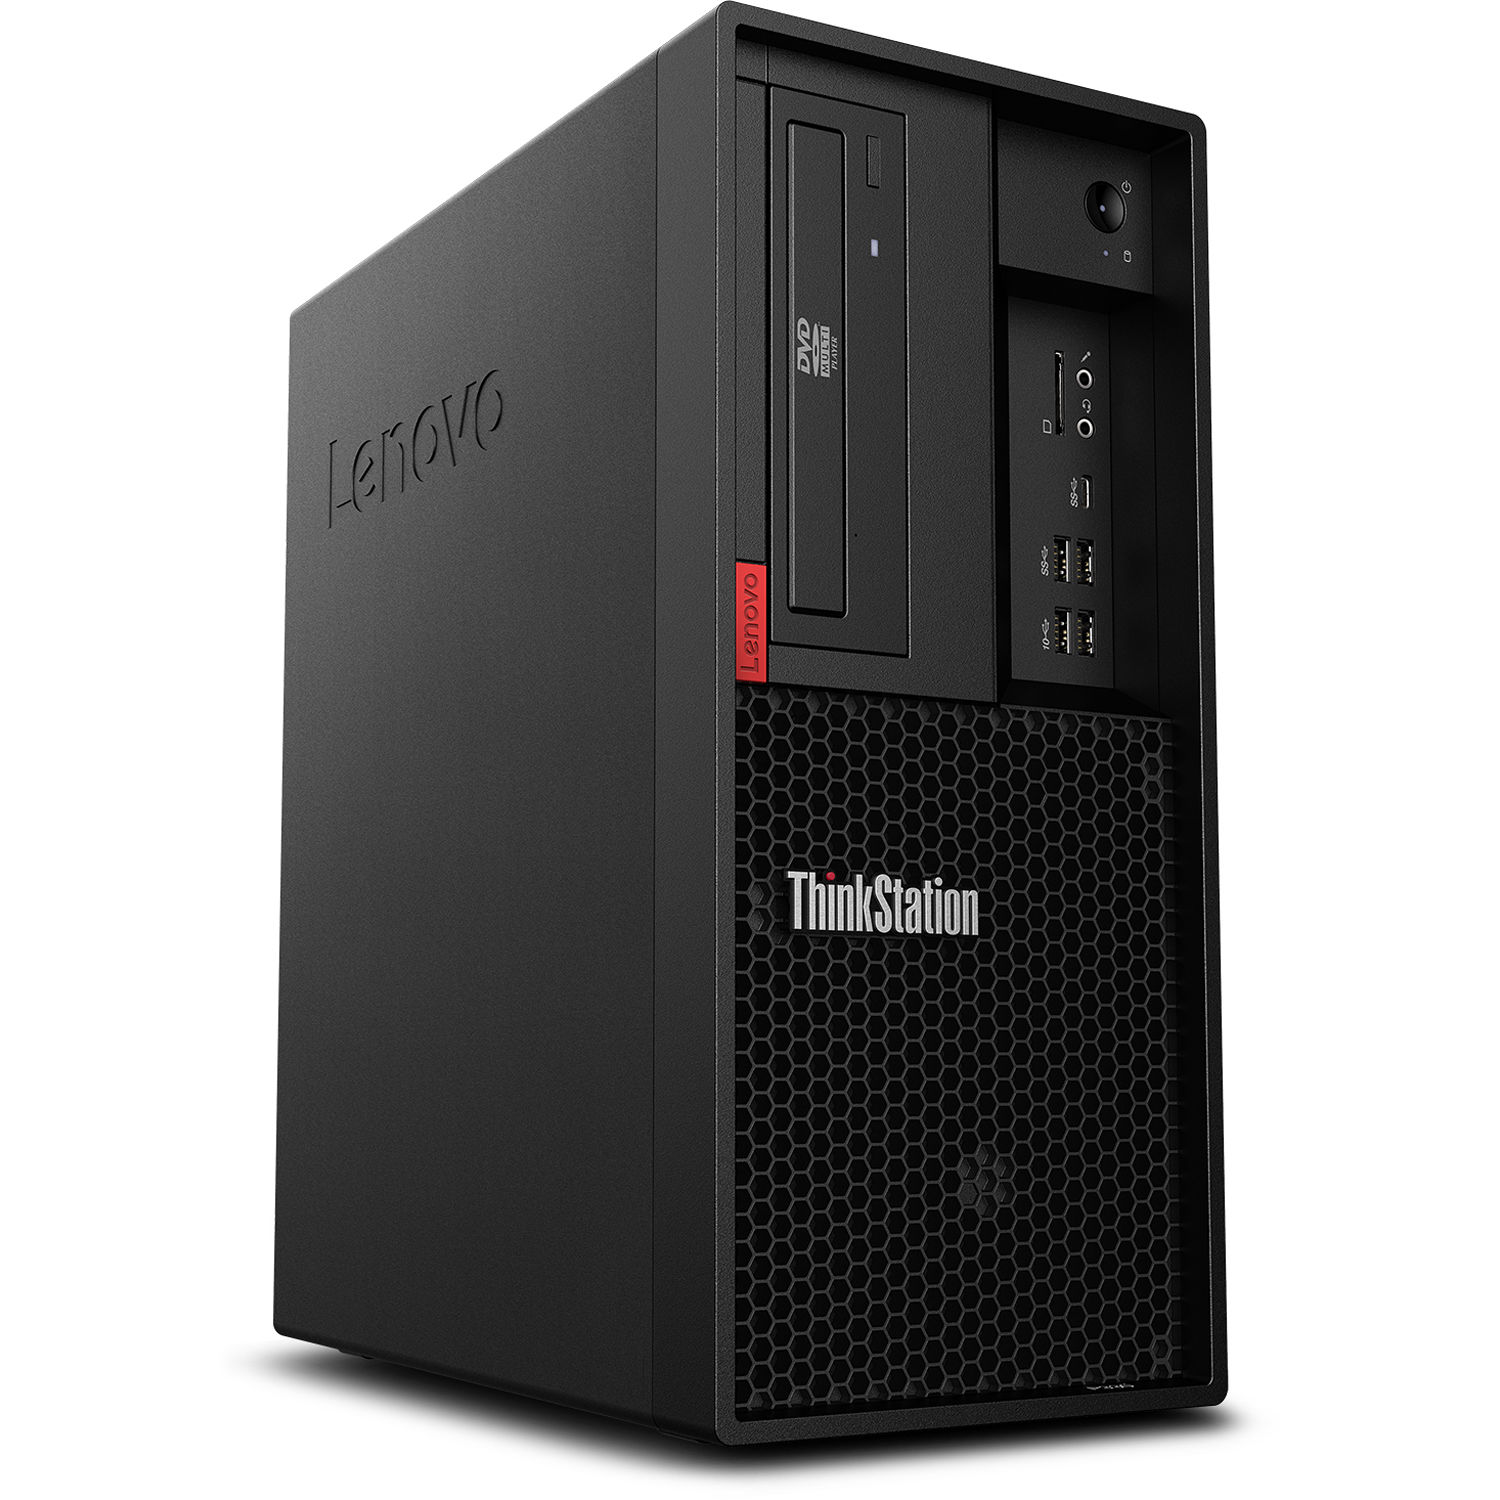 Lenovo ThinkStation P330 Tower Workstation ile Uyumlu SSD / HDD Kutusu  Listesi - Lenovo ThinkStation P330 Tower Workstation Uyumlu SSD HDD Kutusu  / Bilendenal.com Doğru ürünü bilendenal